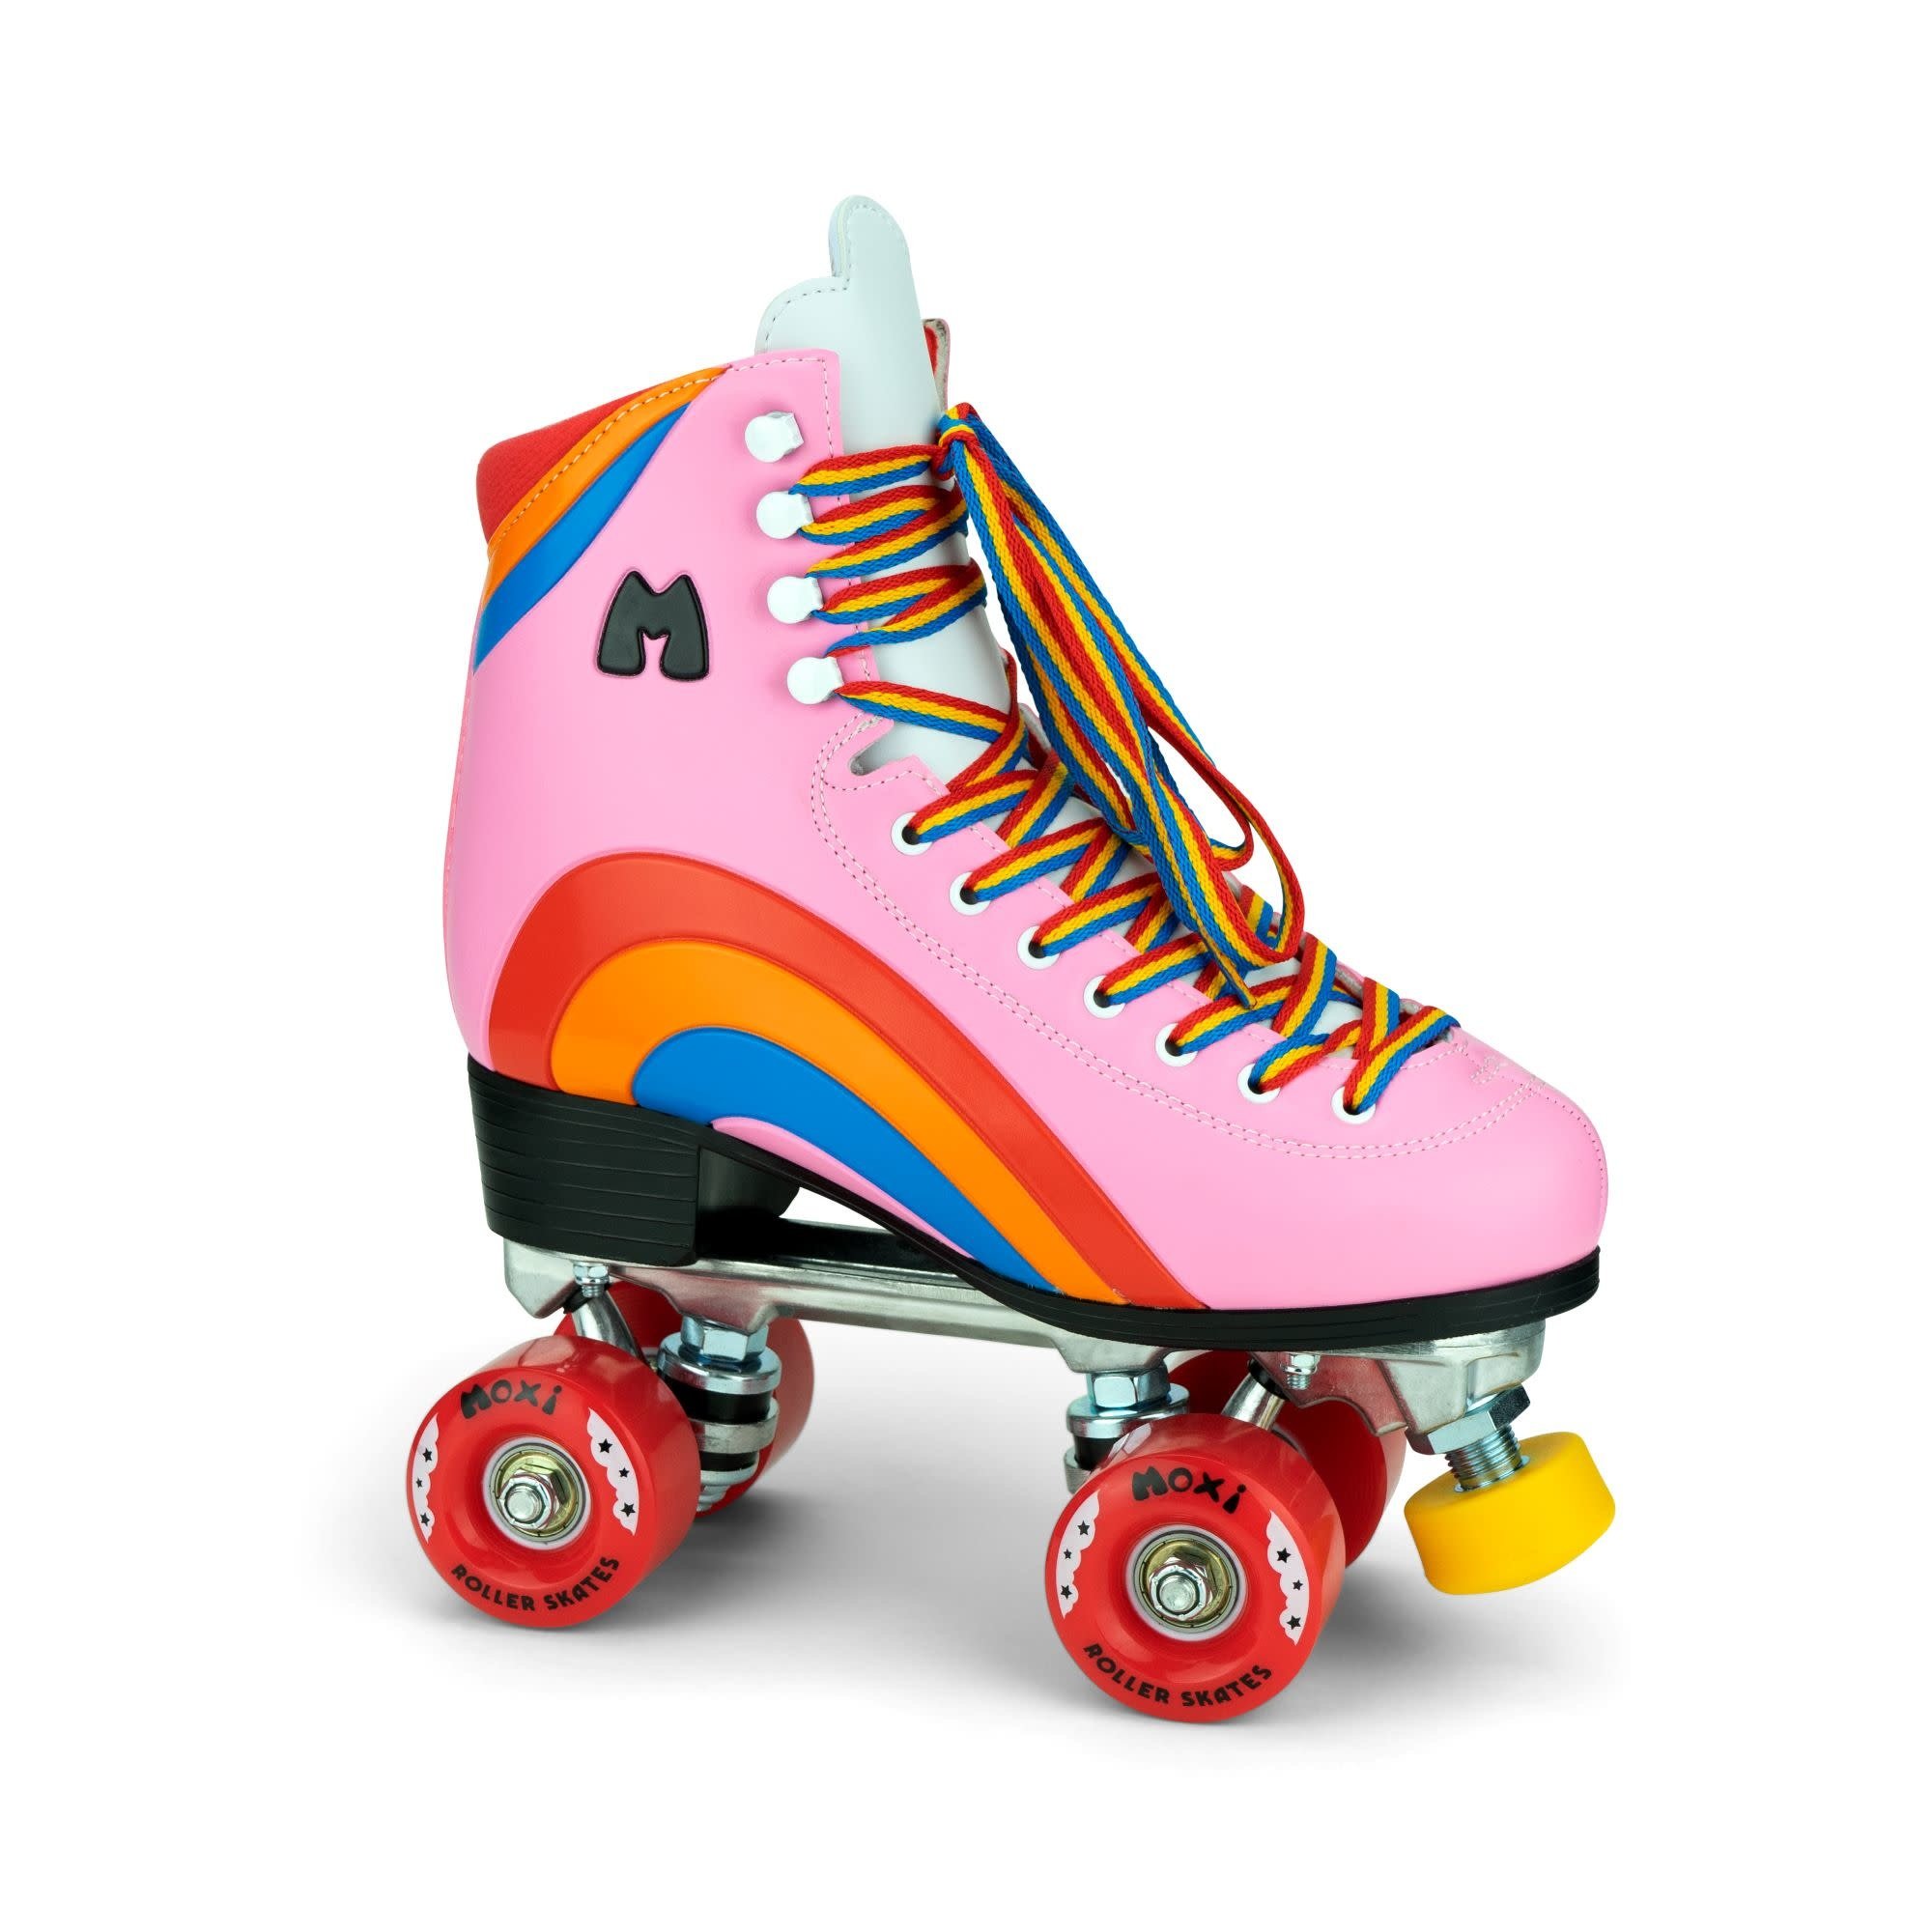 Moxi Rainbow Rider Nerd Roller Skates Inc.